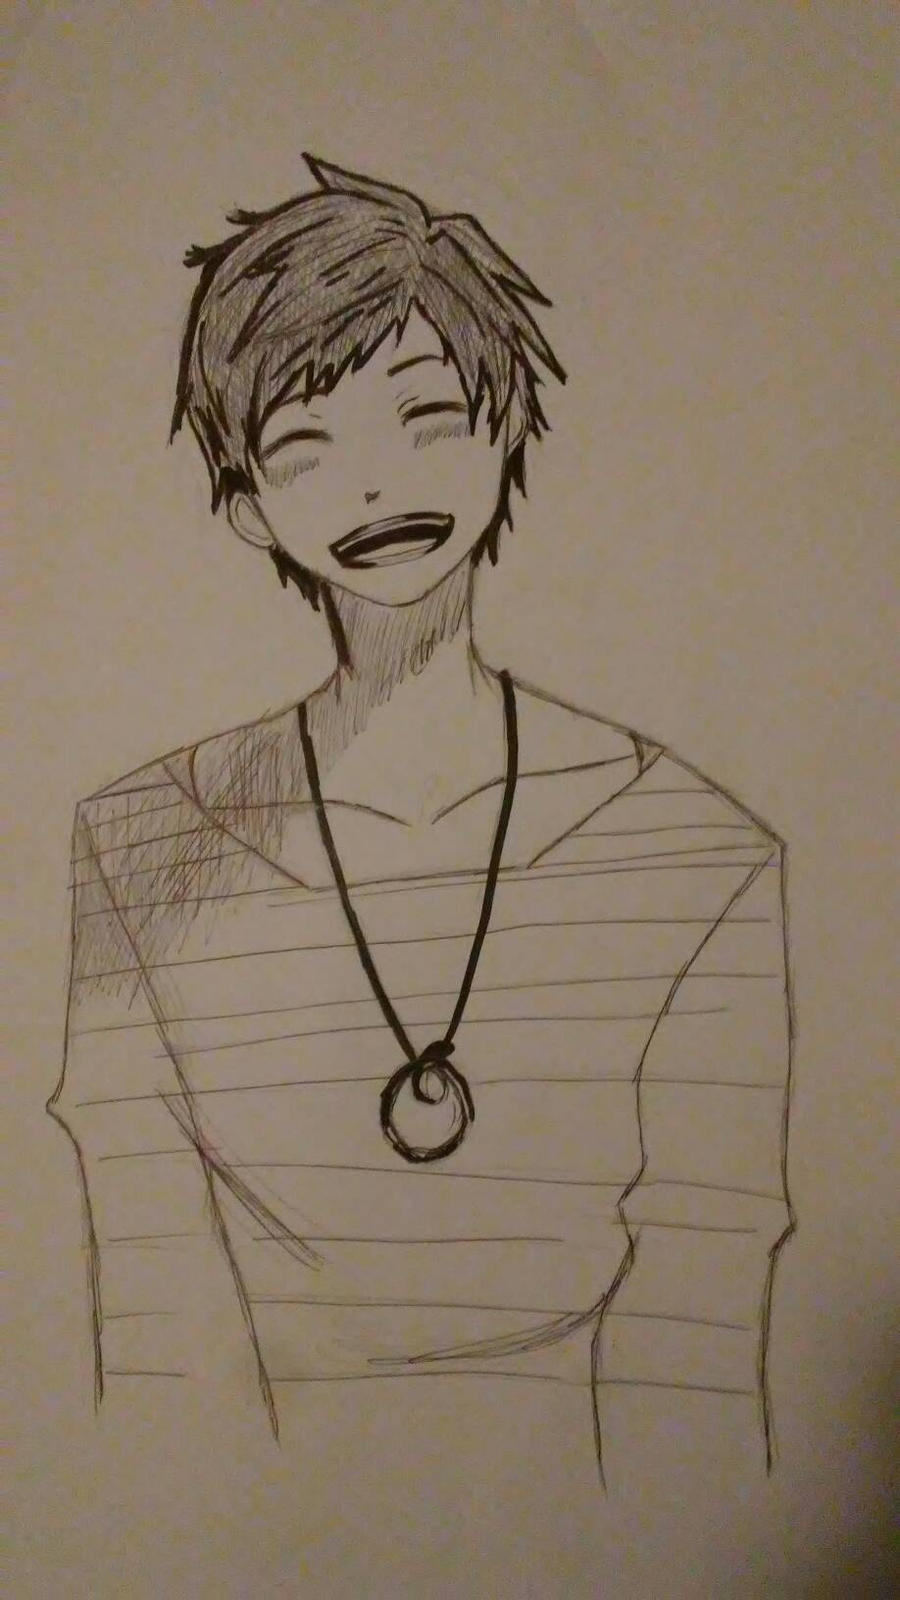 Smiling anime guy by MarexXmarebear on DeviantArt